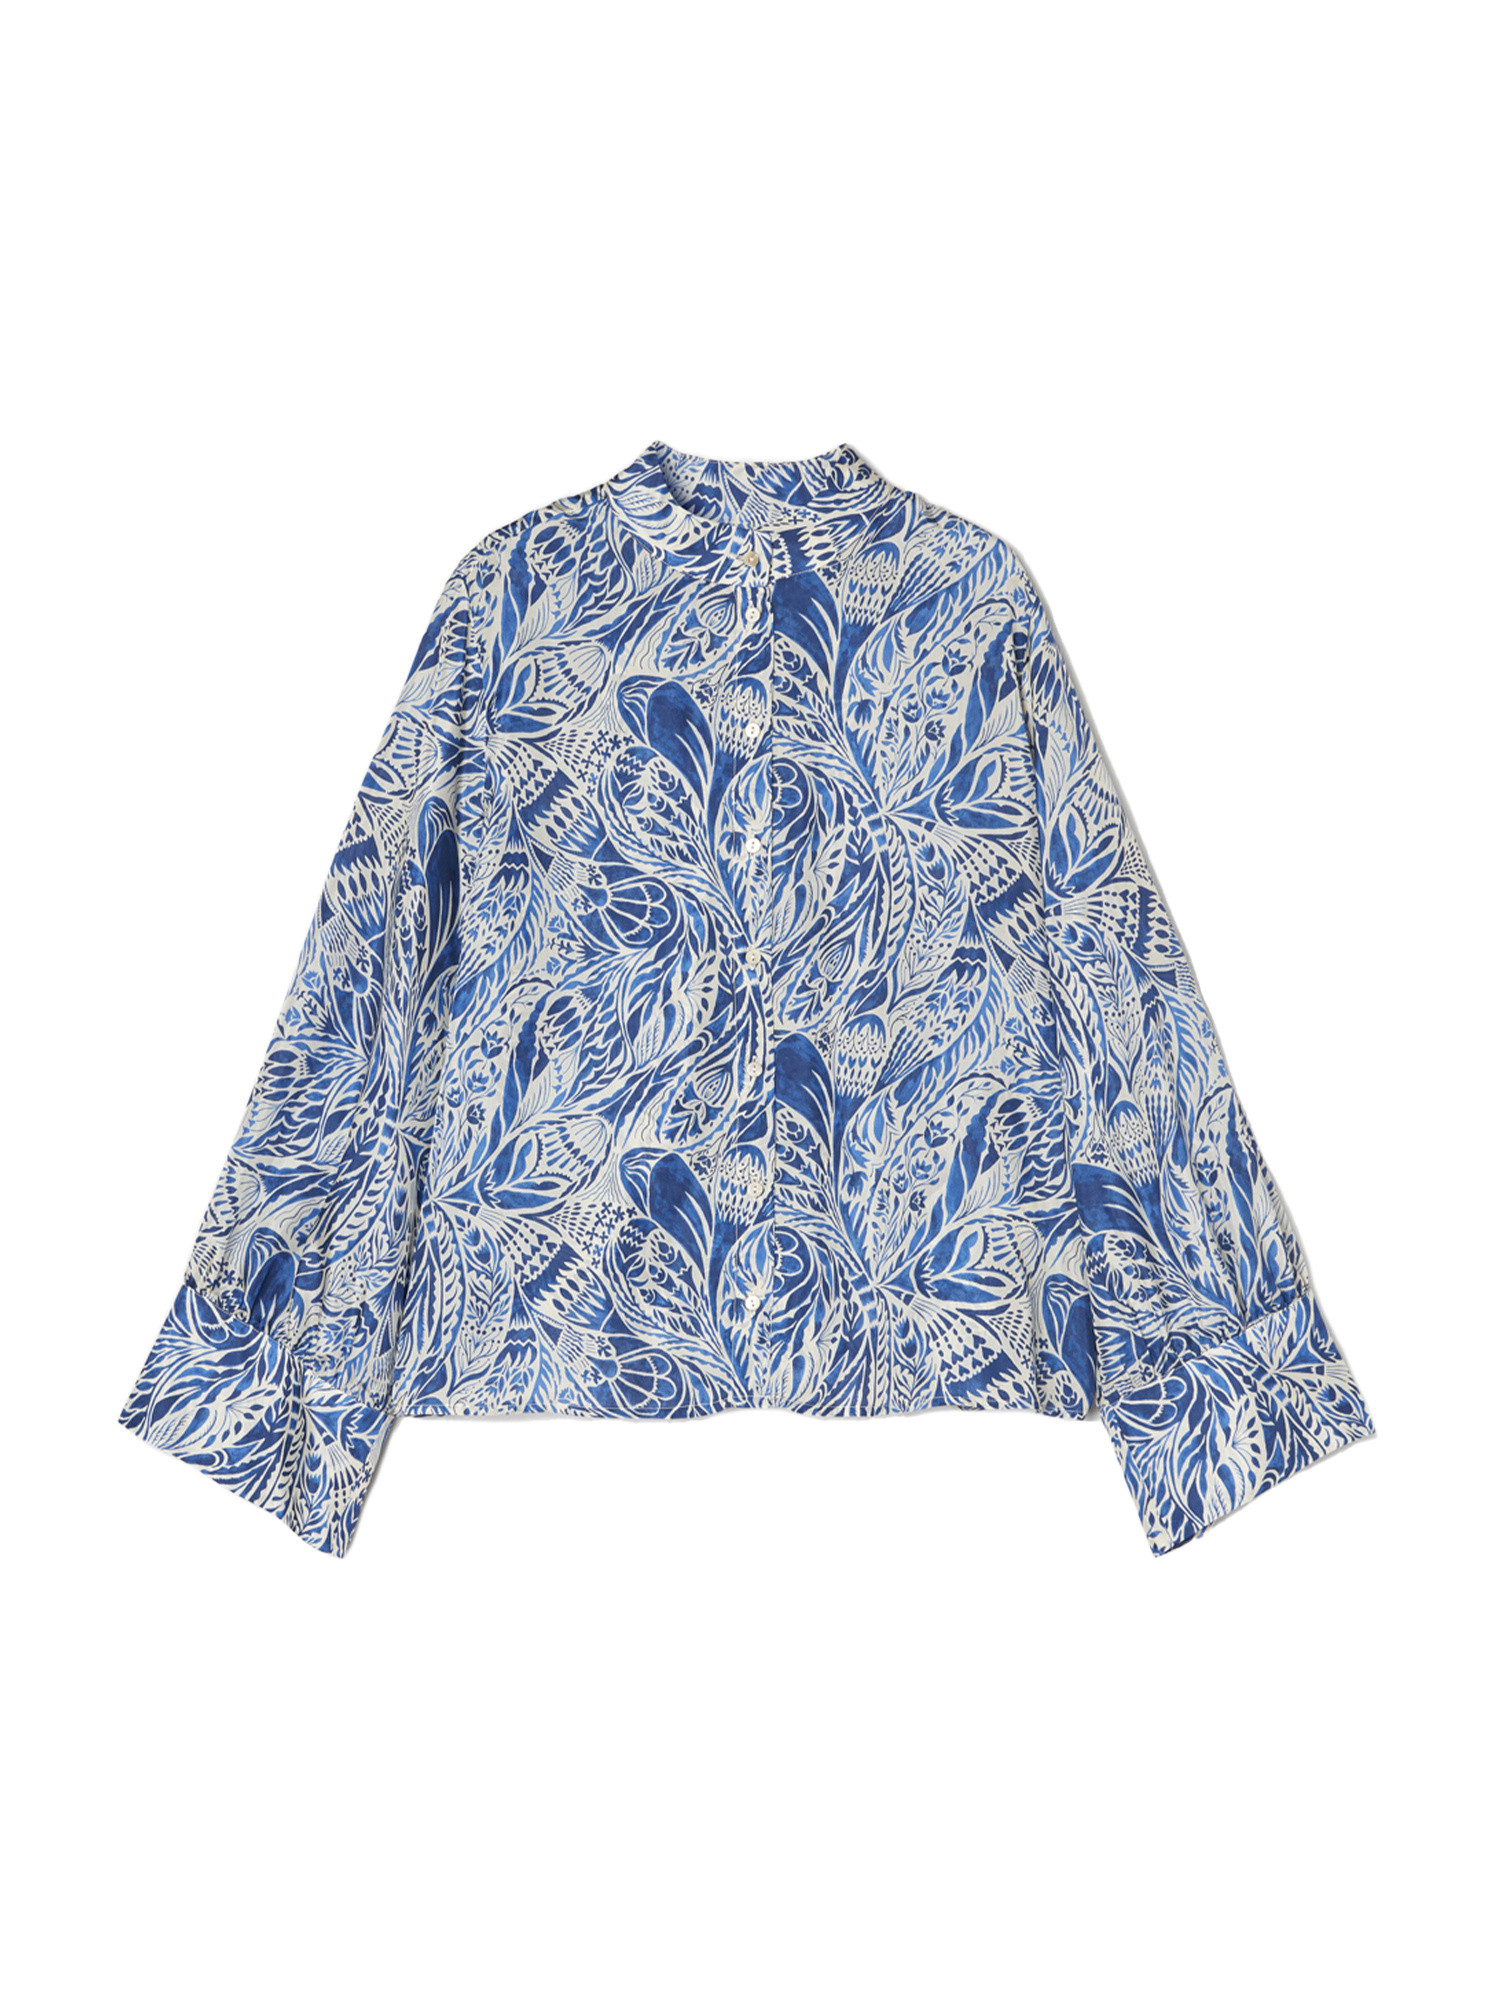 Momonì - Franklin shirt in printed habotai silk, Blue Cornflower, large image number 0